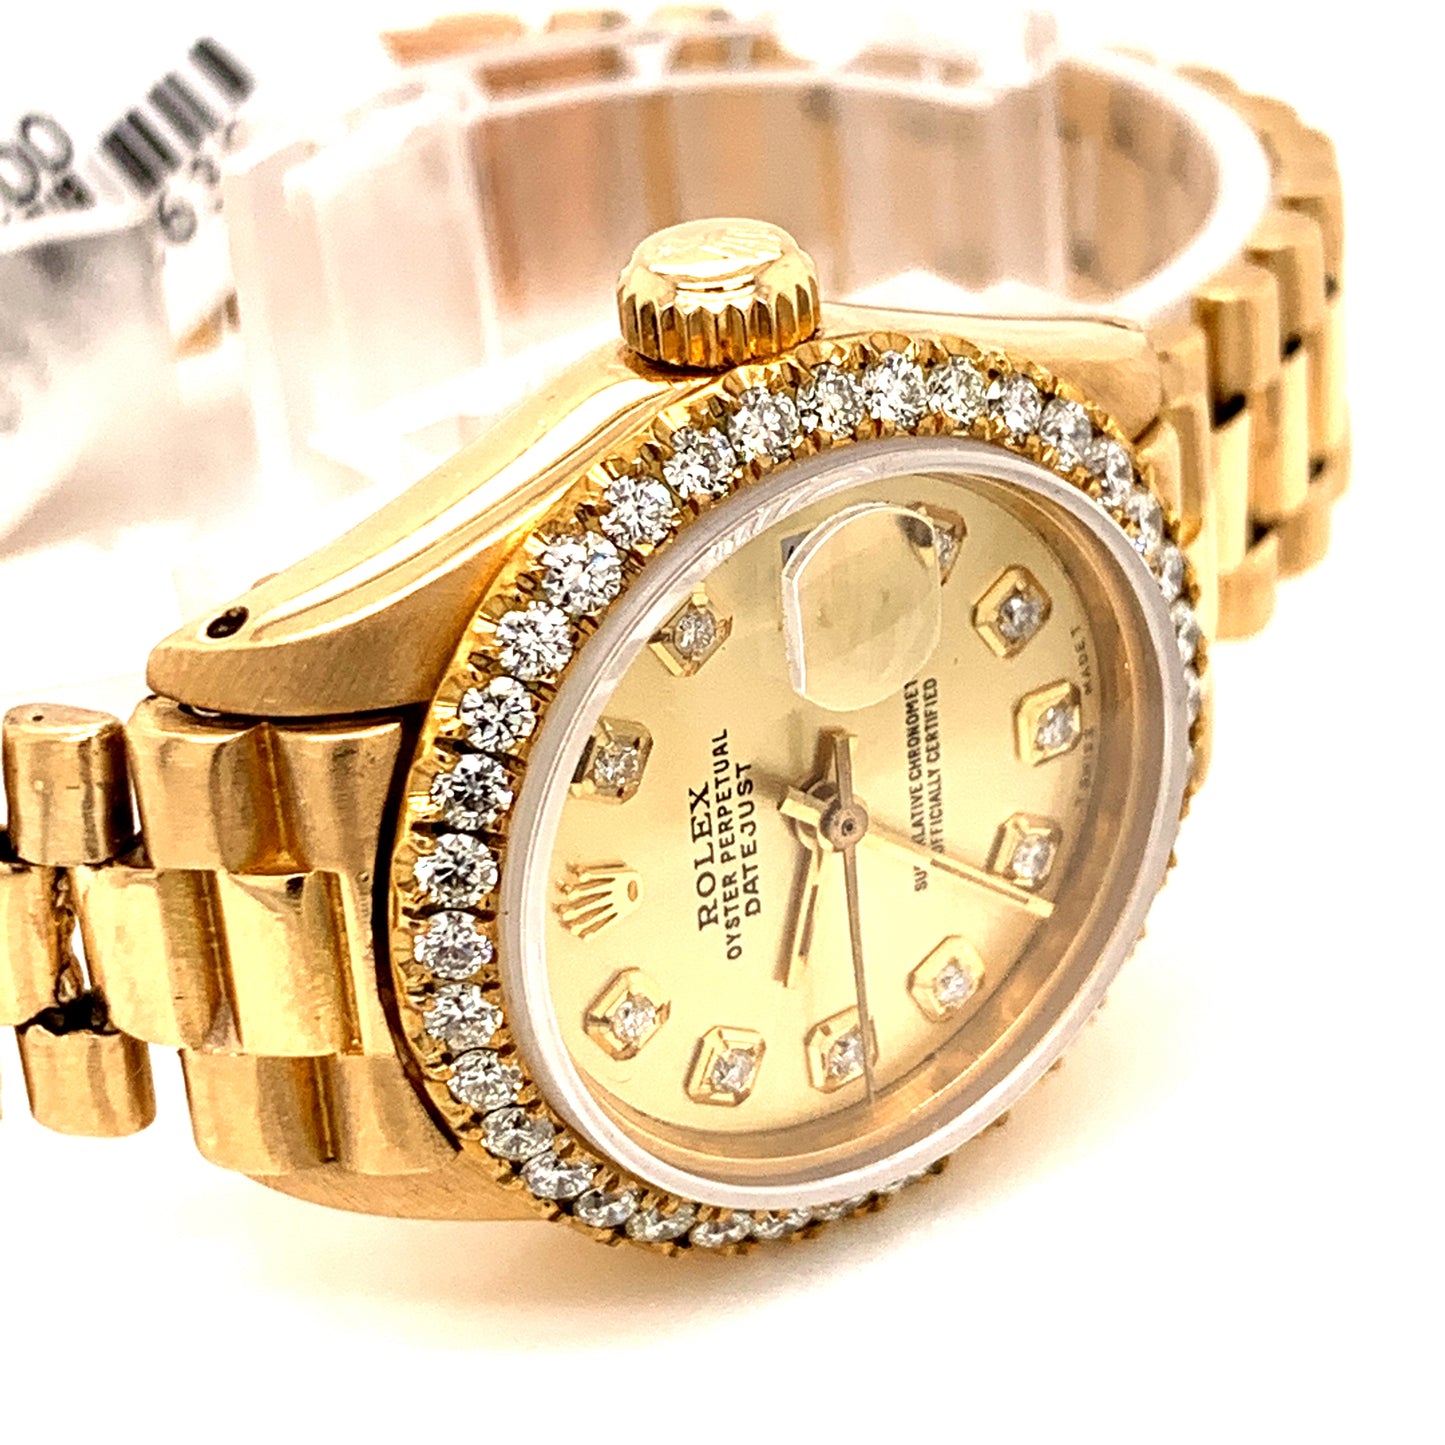 Rolex 6917 Ladies President 18k Mid size 26mm Diamond Bezel